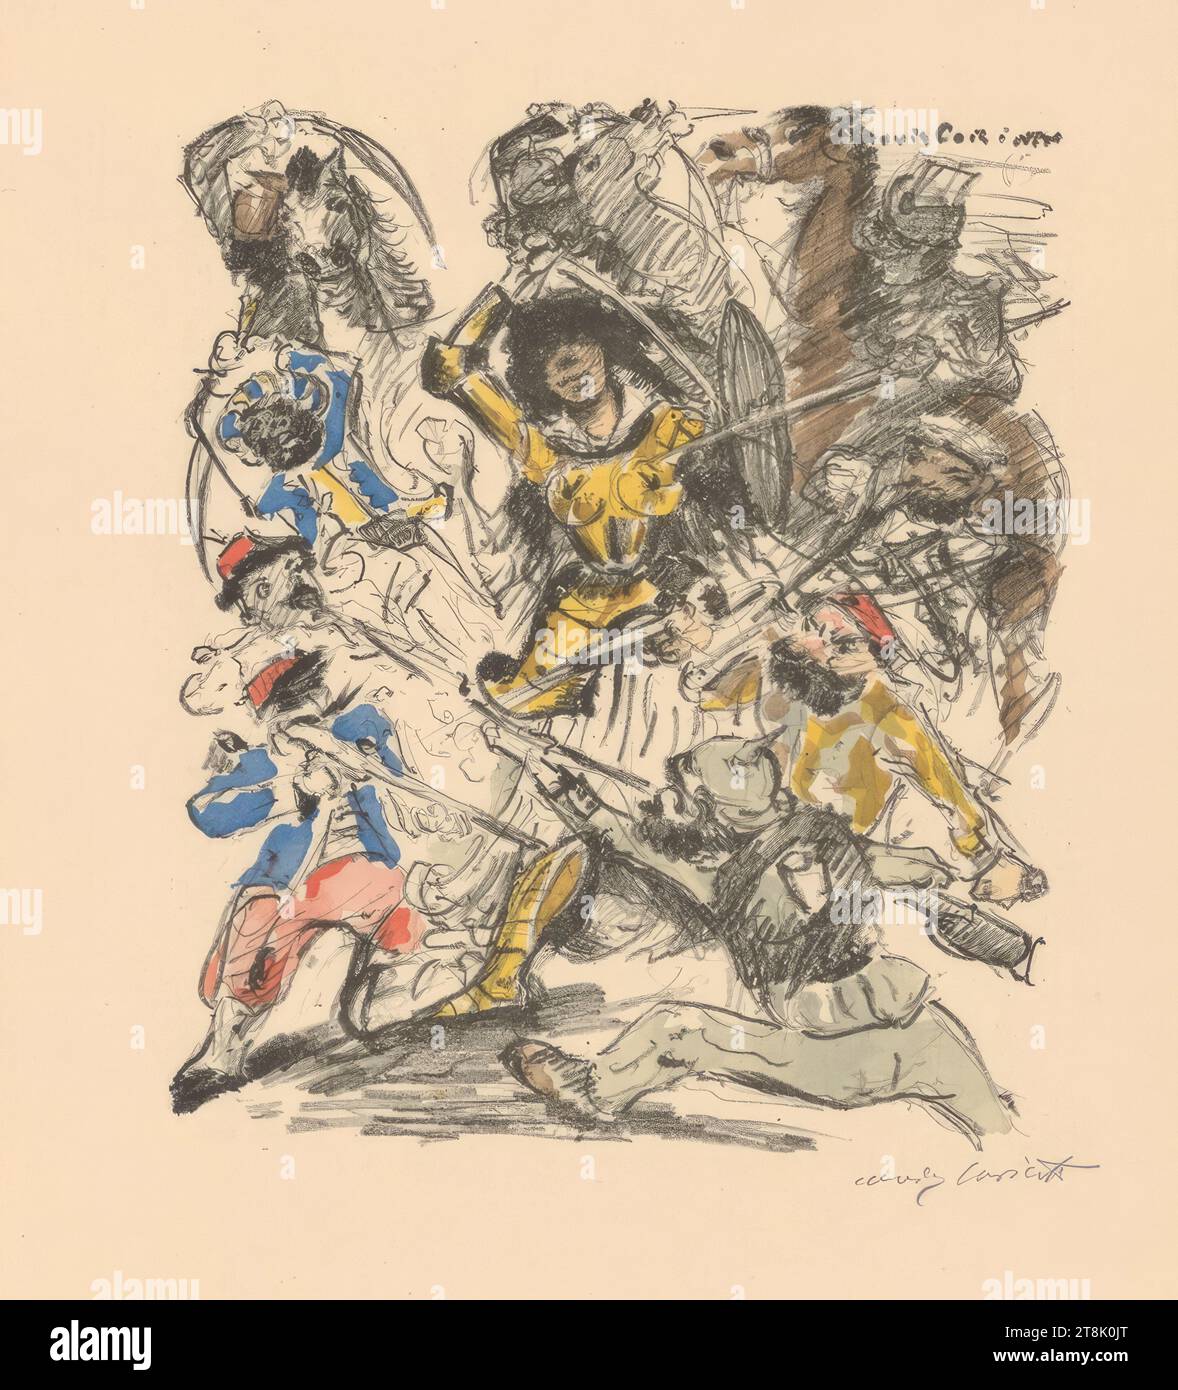 Battle scene, from: 'War and Art. Original stone drawings of the Berlin Secession' folder 16, Lovis Corinth, Tapiau 1858 - 1925 Zandvoort, 1915 - 1917, prints, lithography Stock Photo